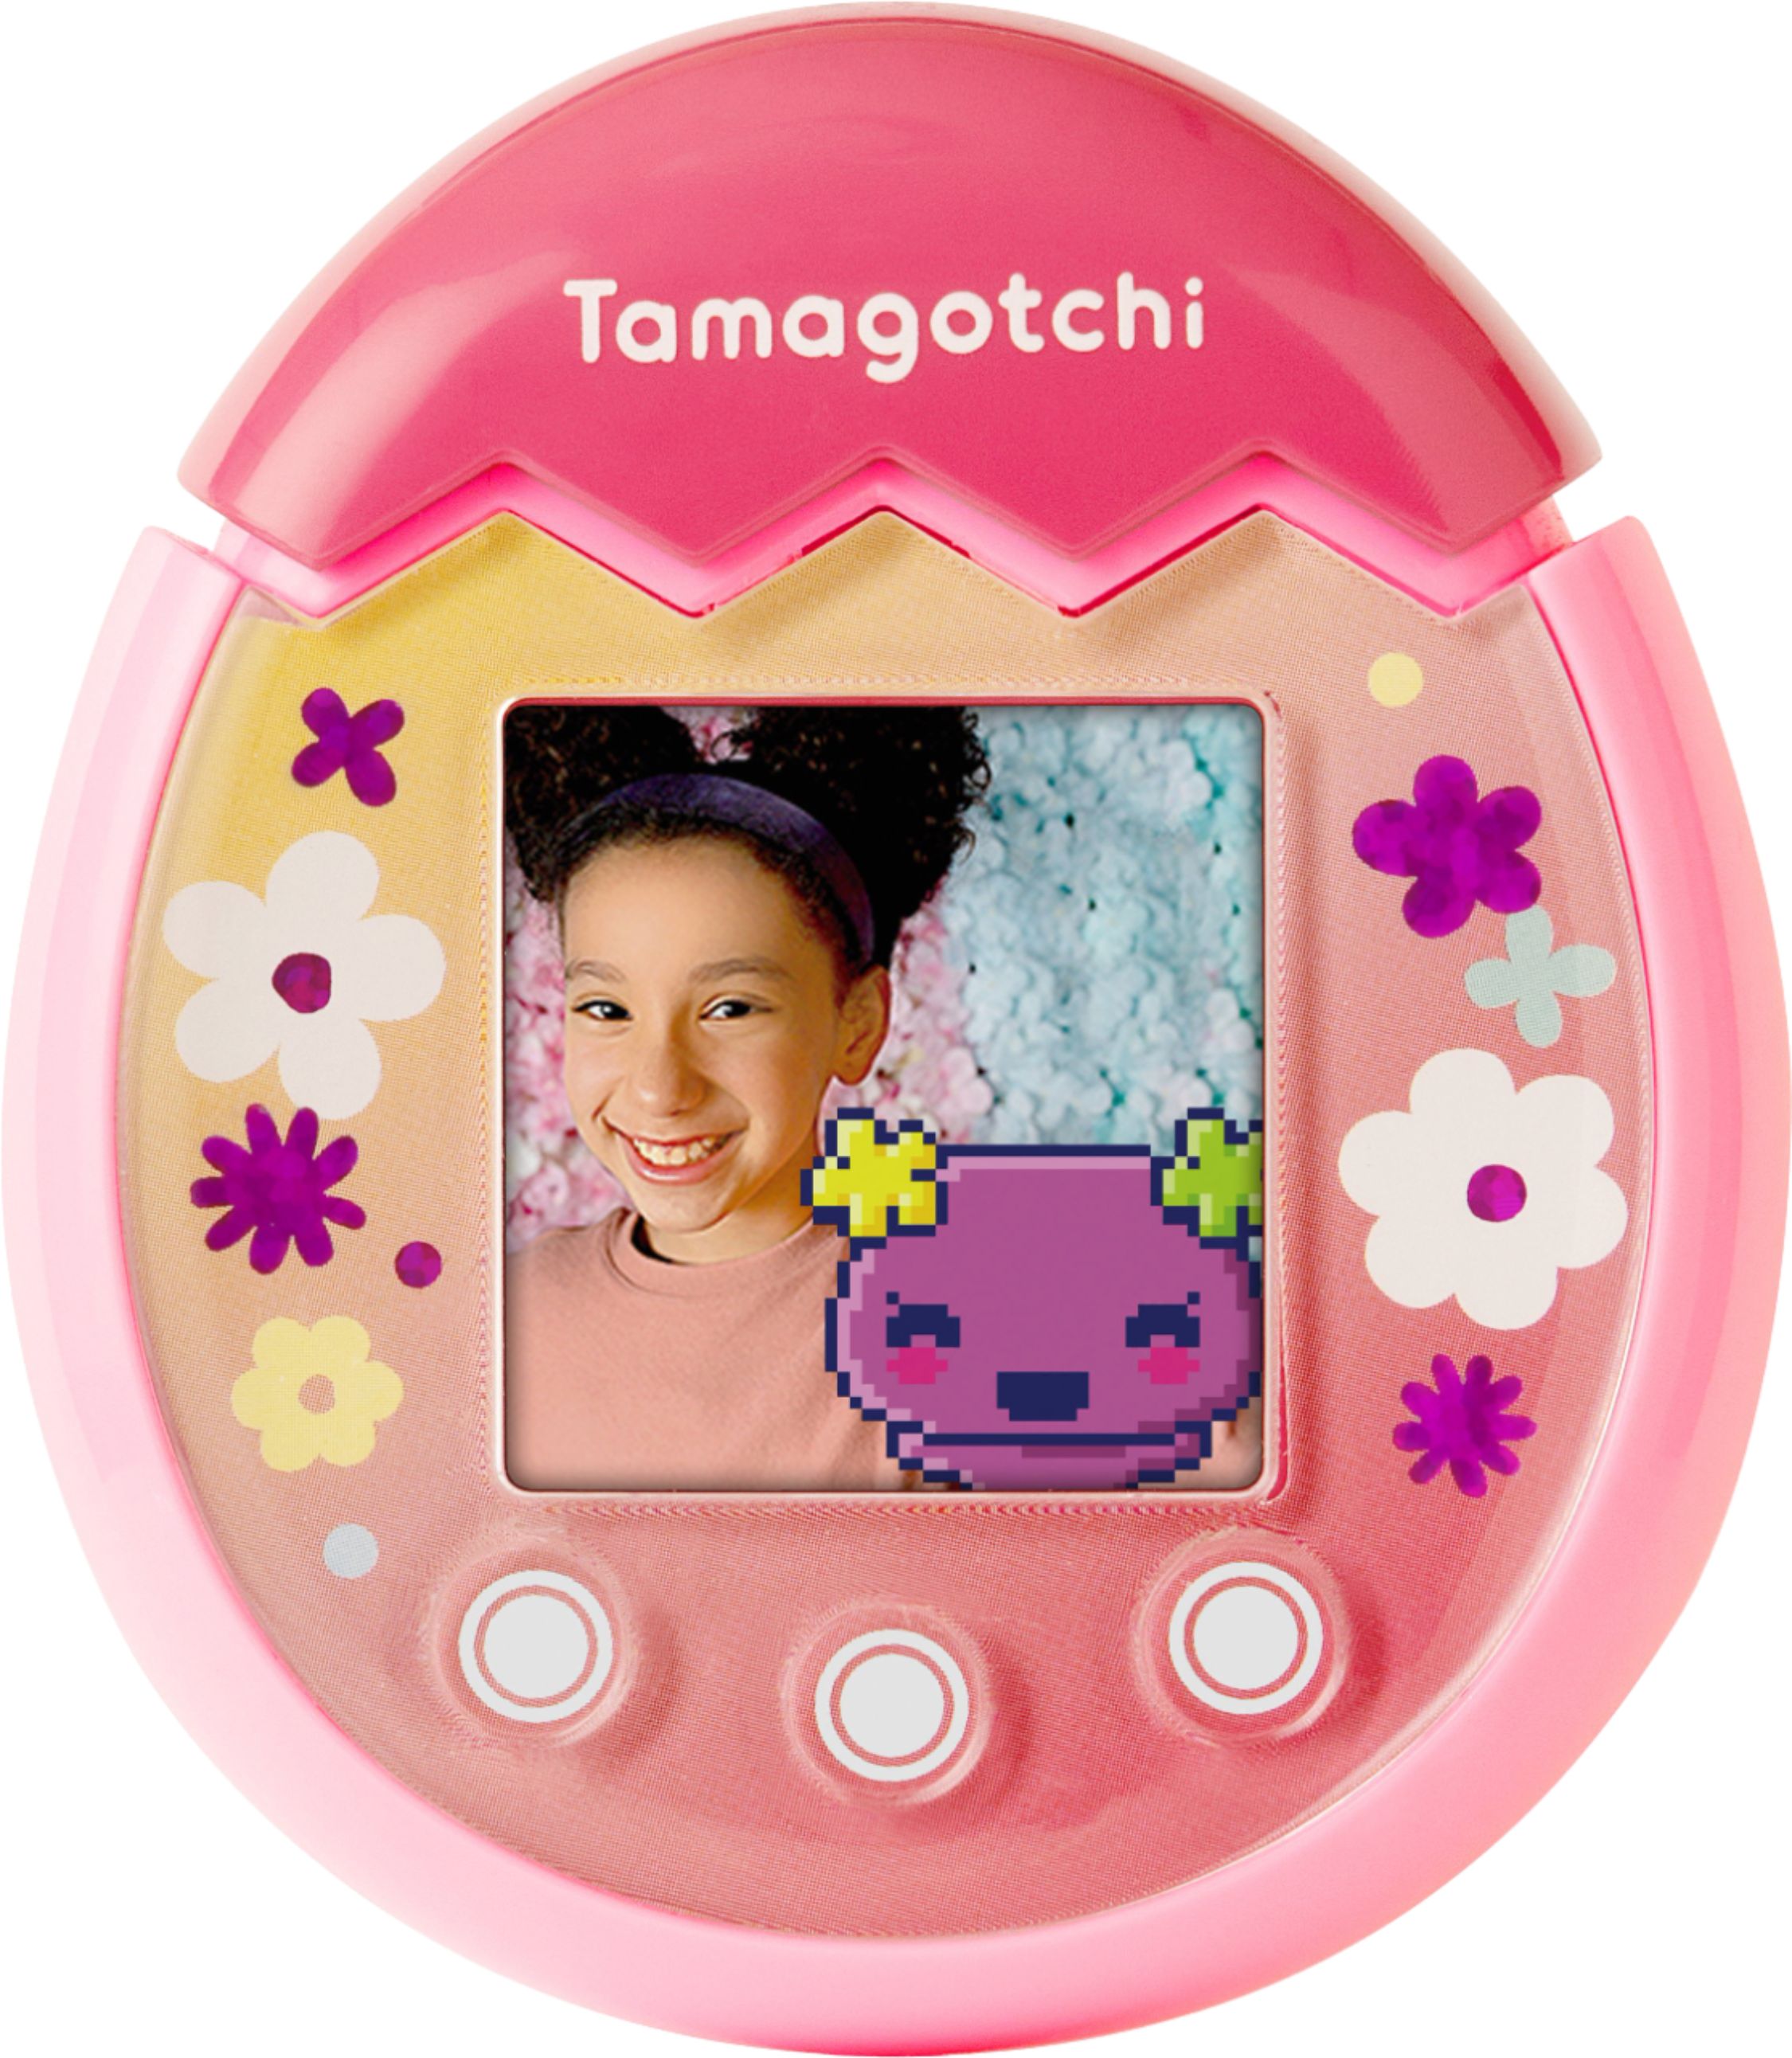 Bandai - Tamagotchi Pix - Pink